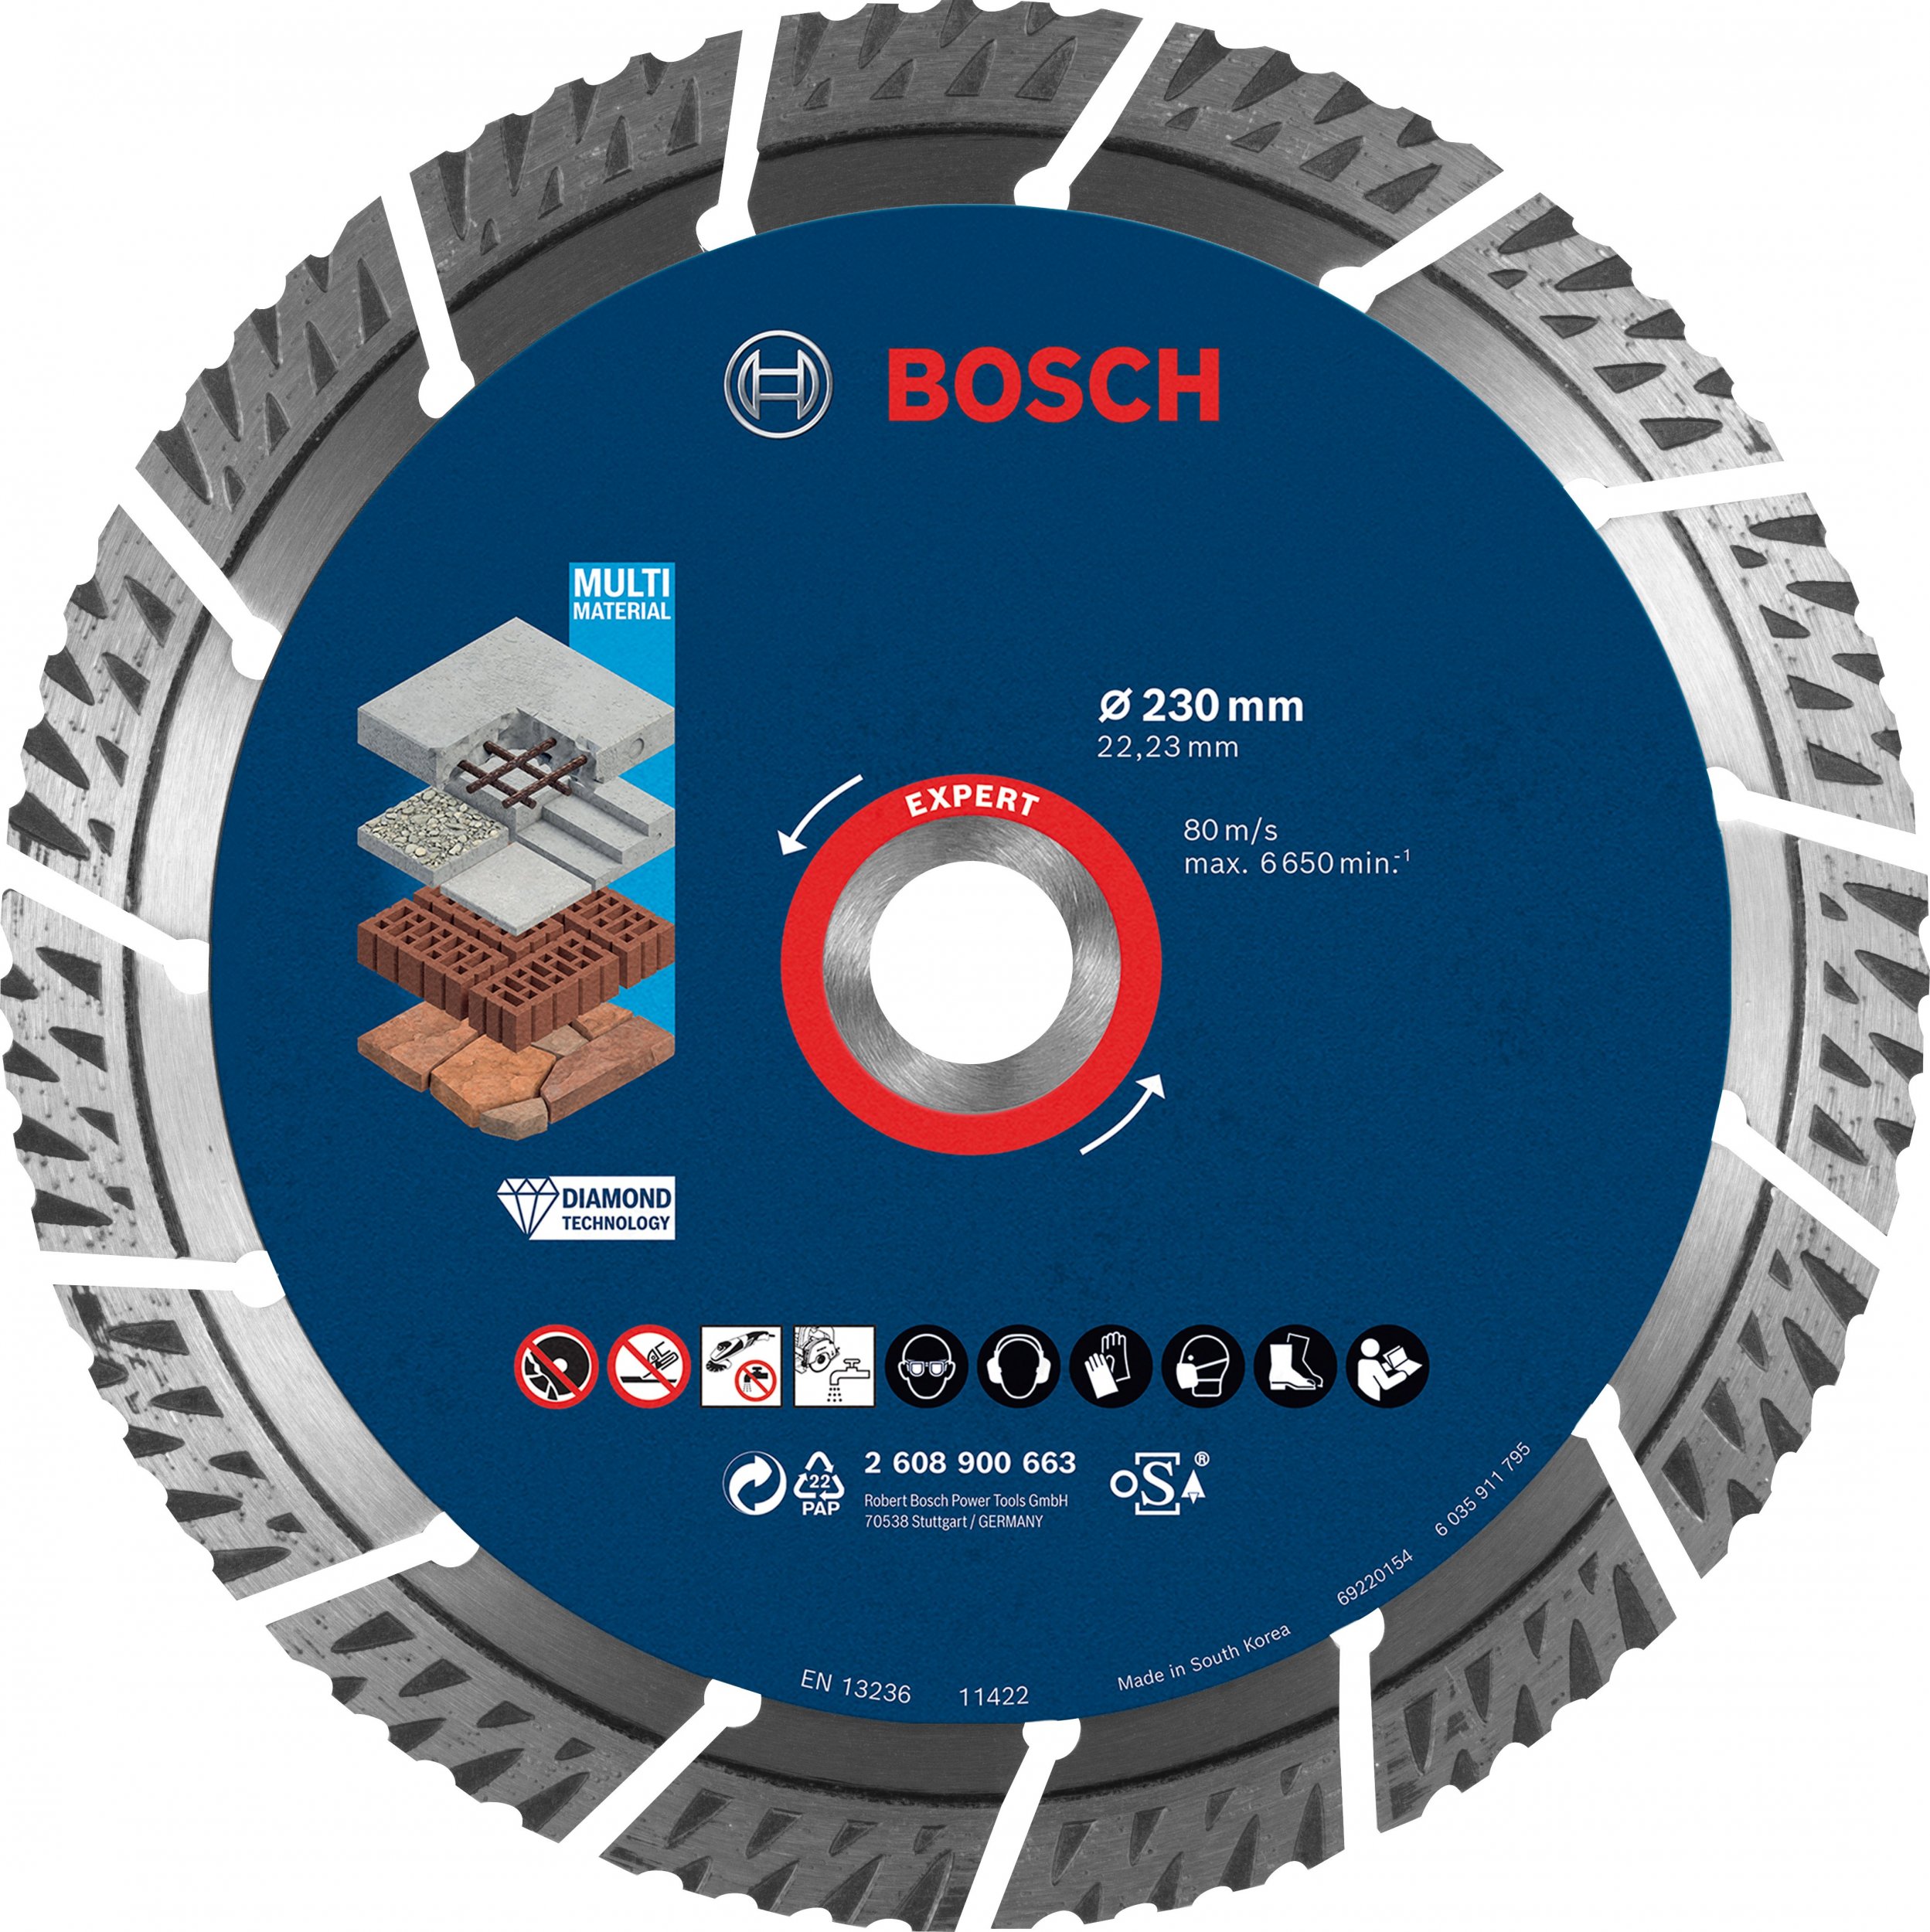 Bosch Diamentowa tarcza tnaca EXPERT MultiMaterial 230x22,23x2,4x15mm 2608900663 (4059952539980)